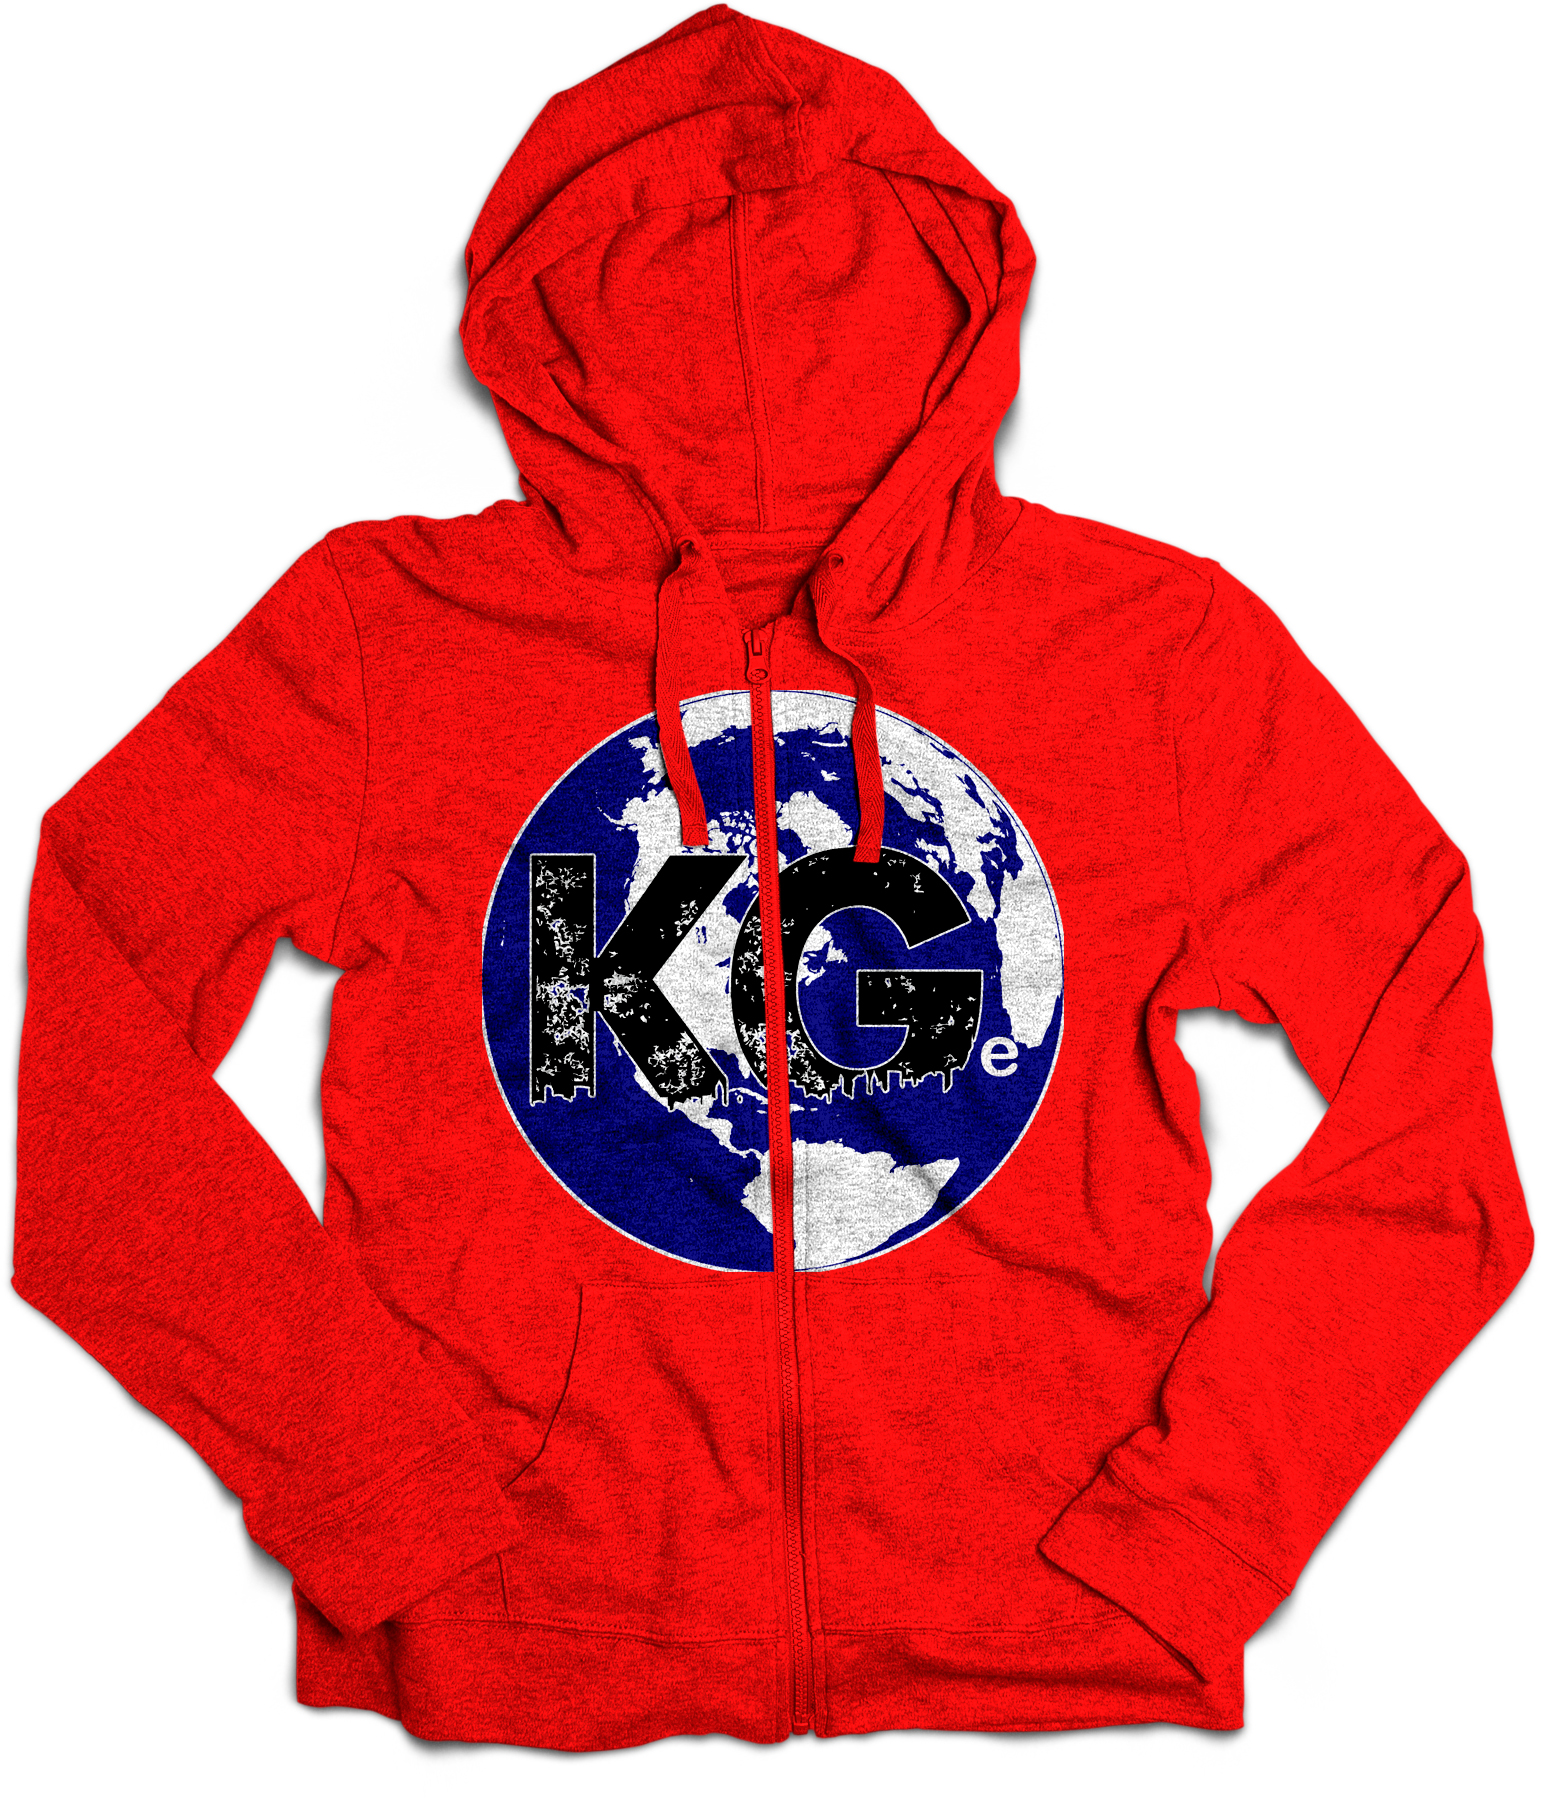 KG World Red Hooded Zip Sweatshirt